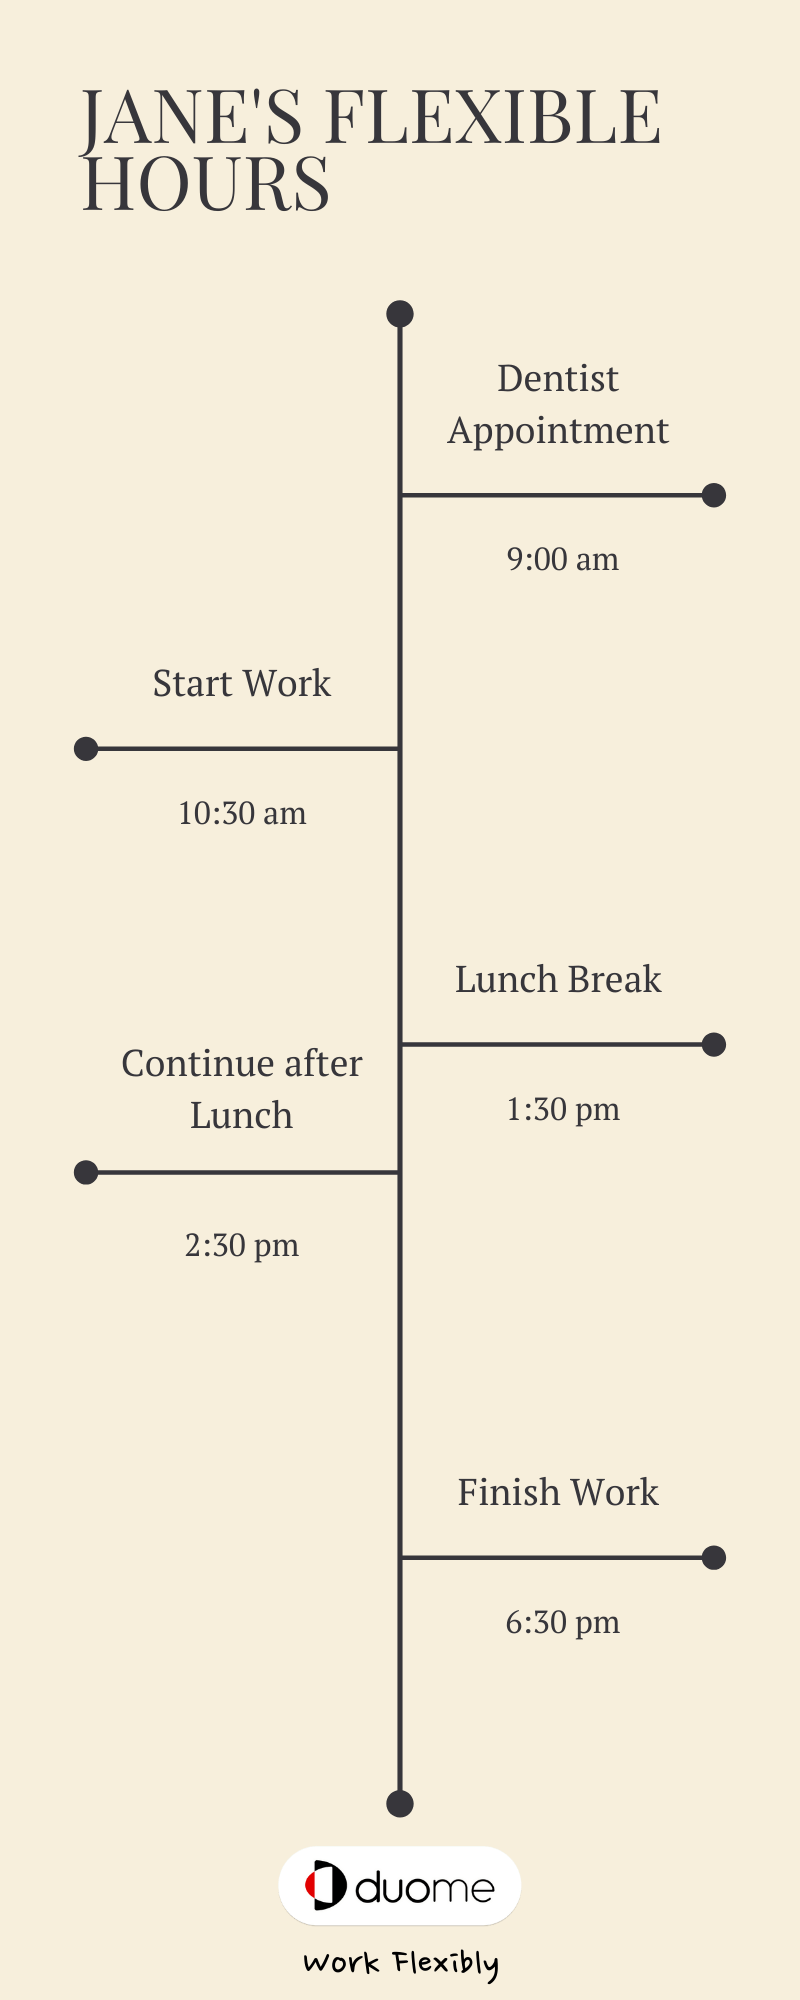 flexible hours infographic example